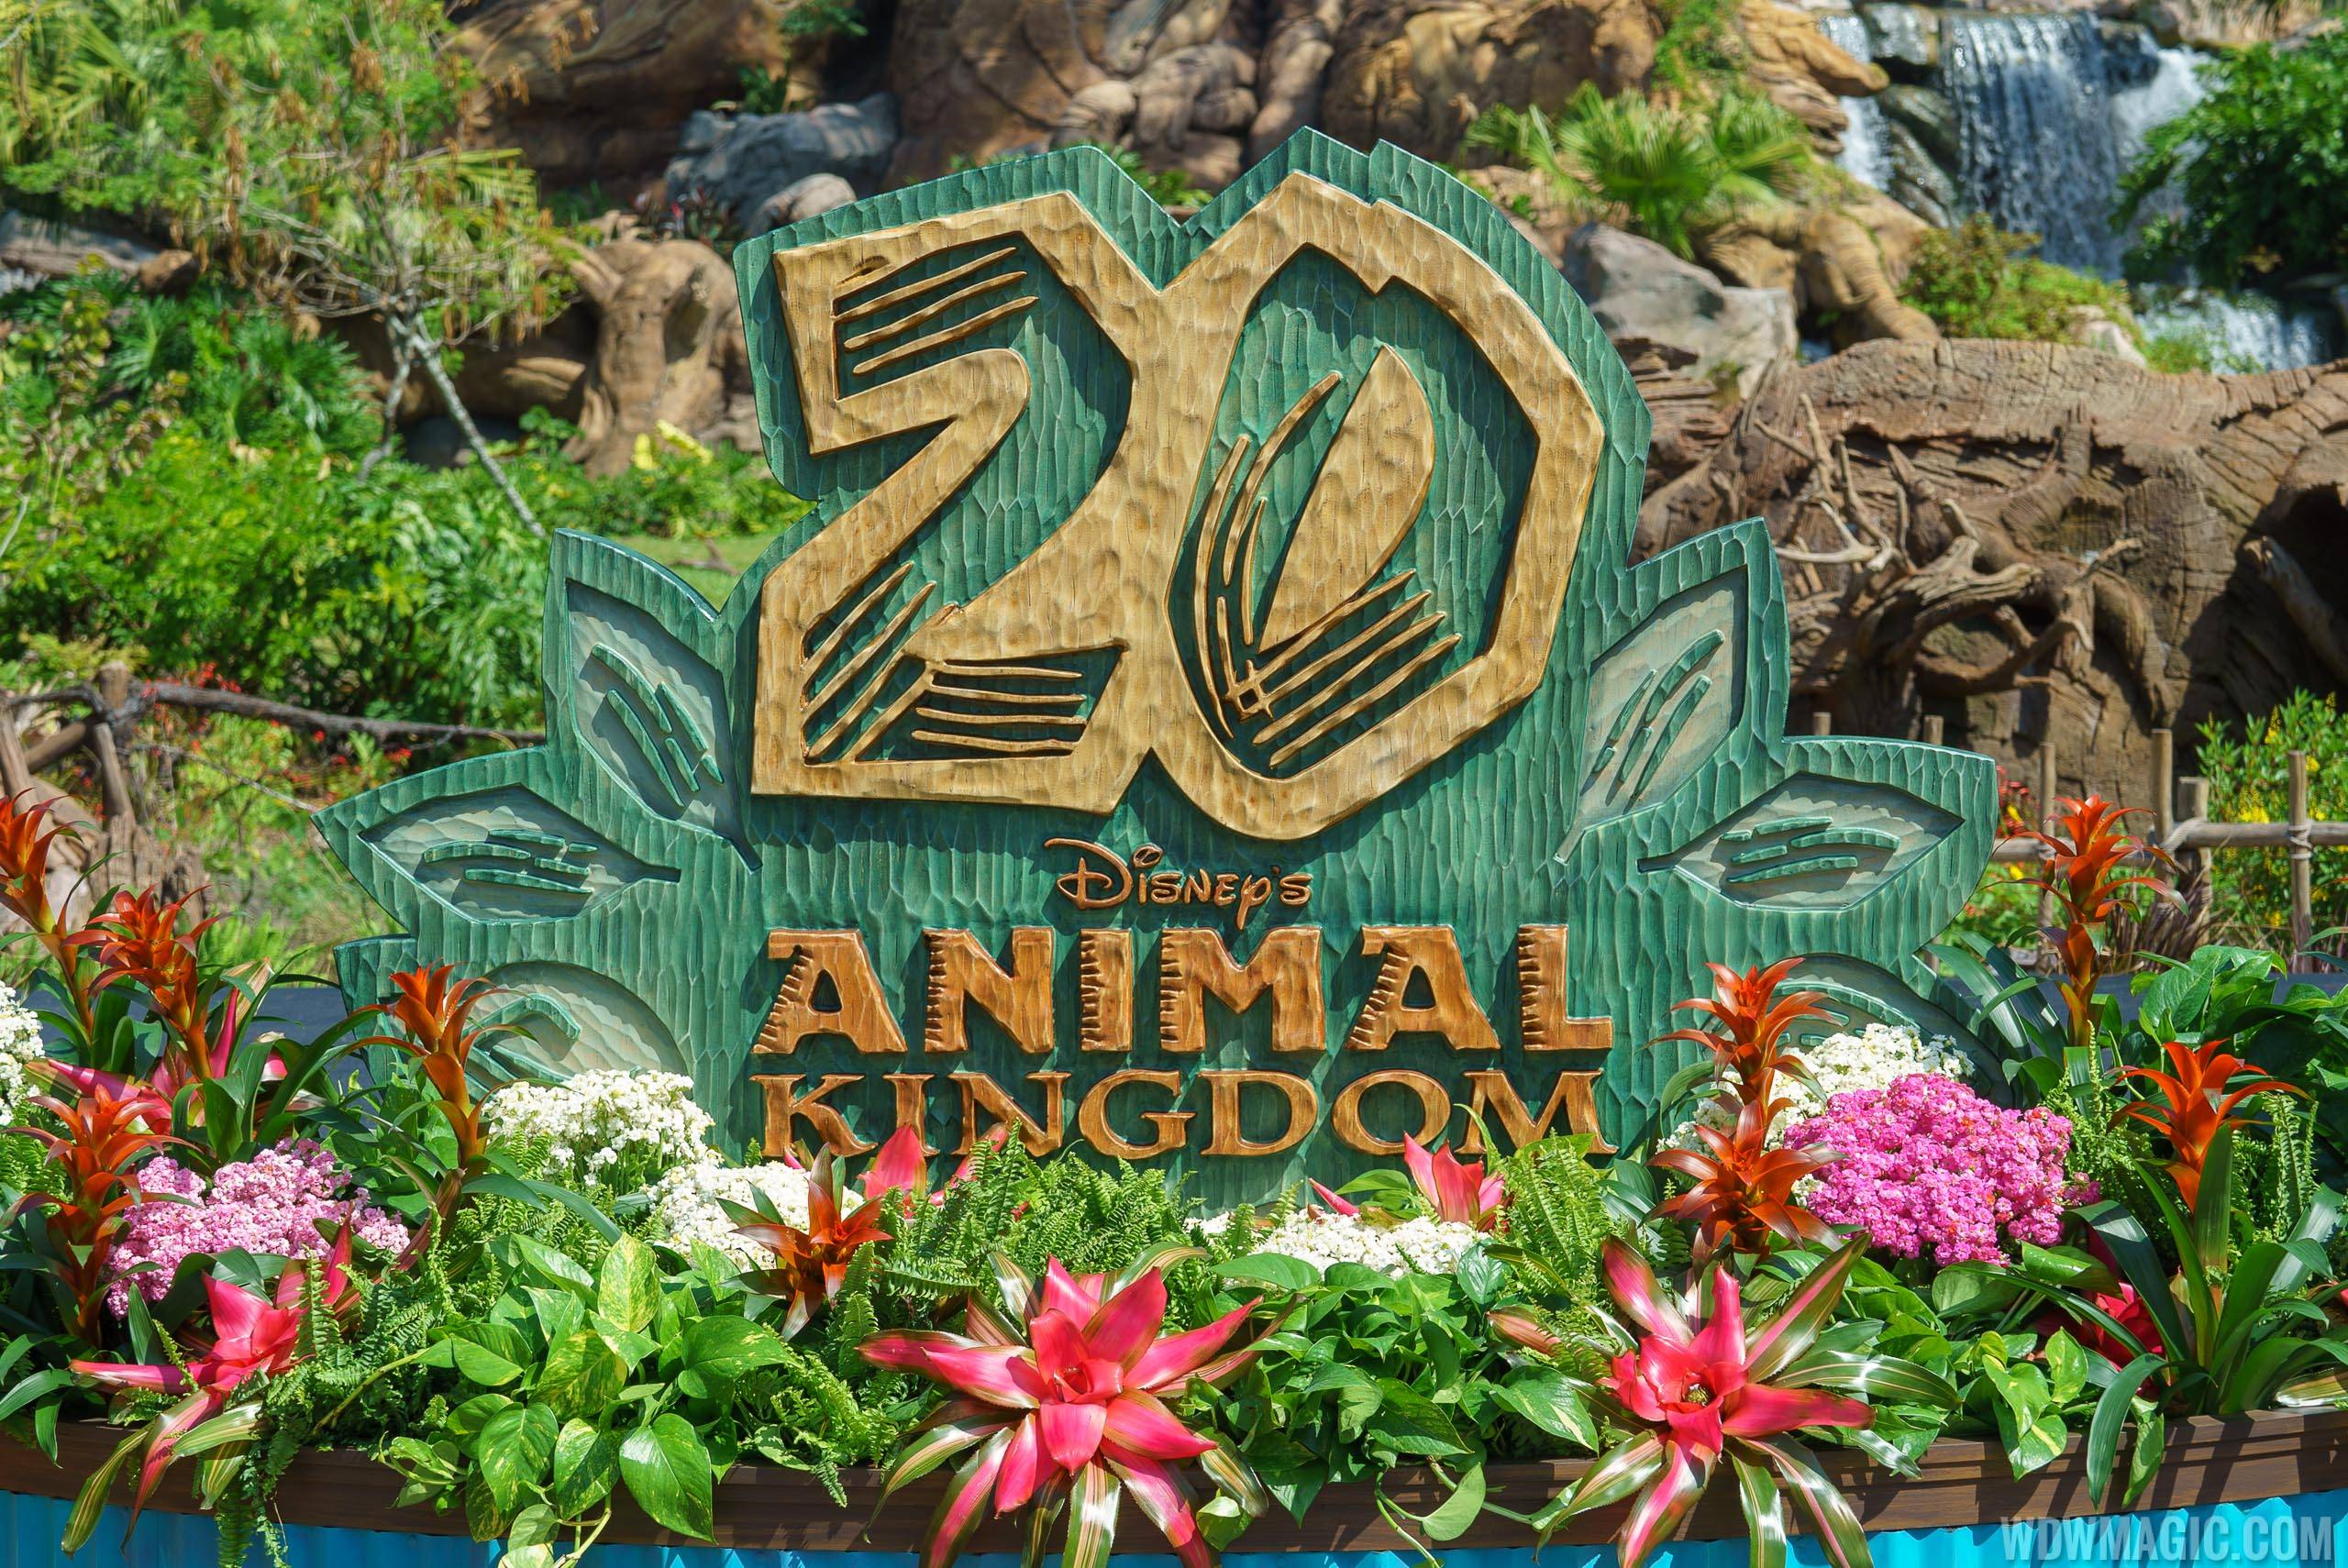 Disney's Animal Kingdom celebrates 20 years years of adventure